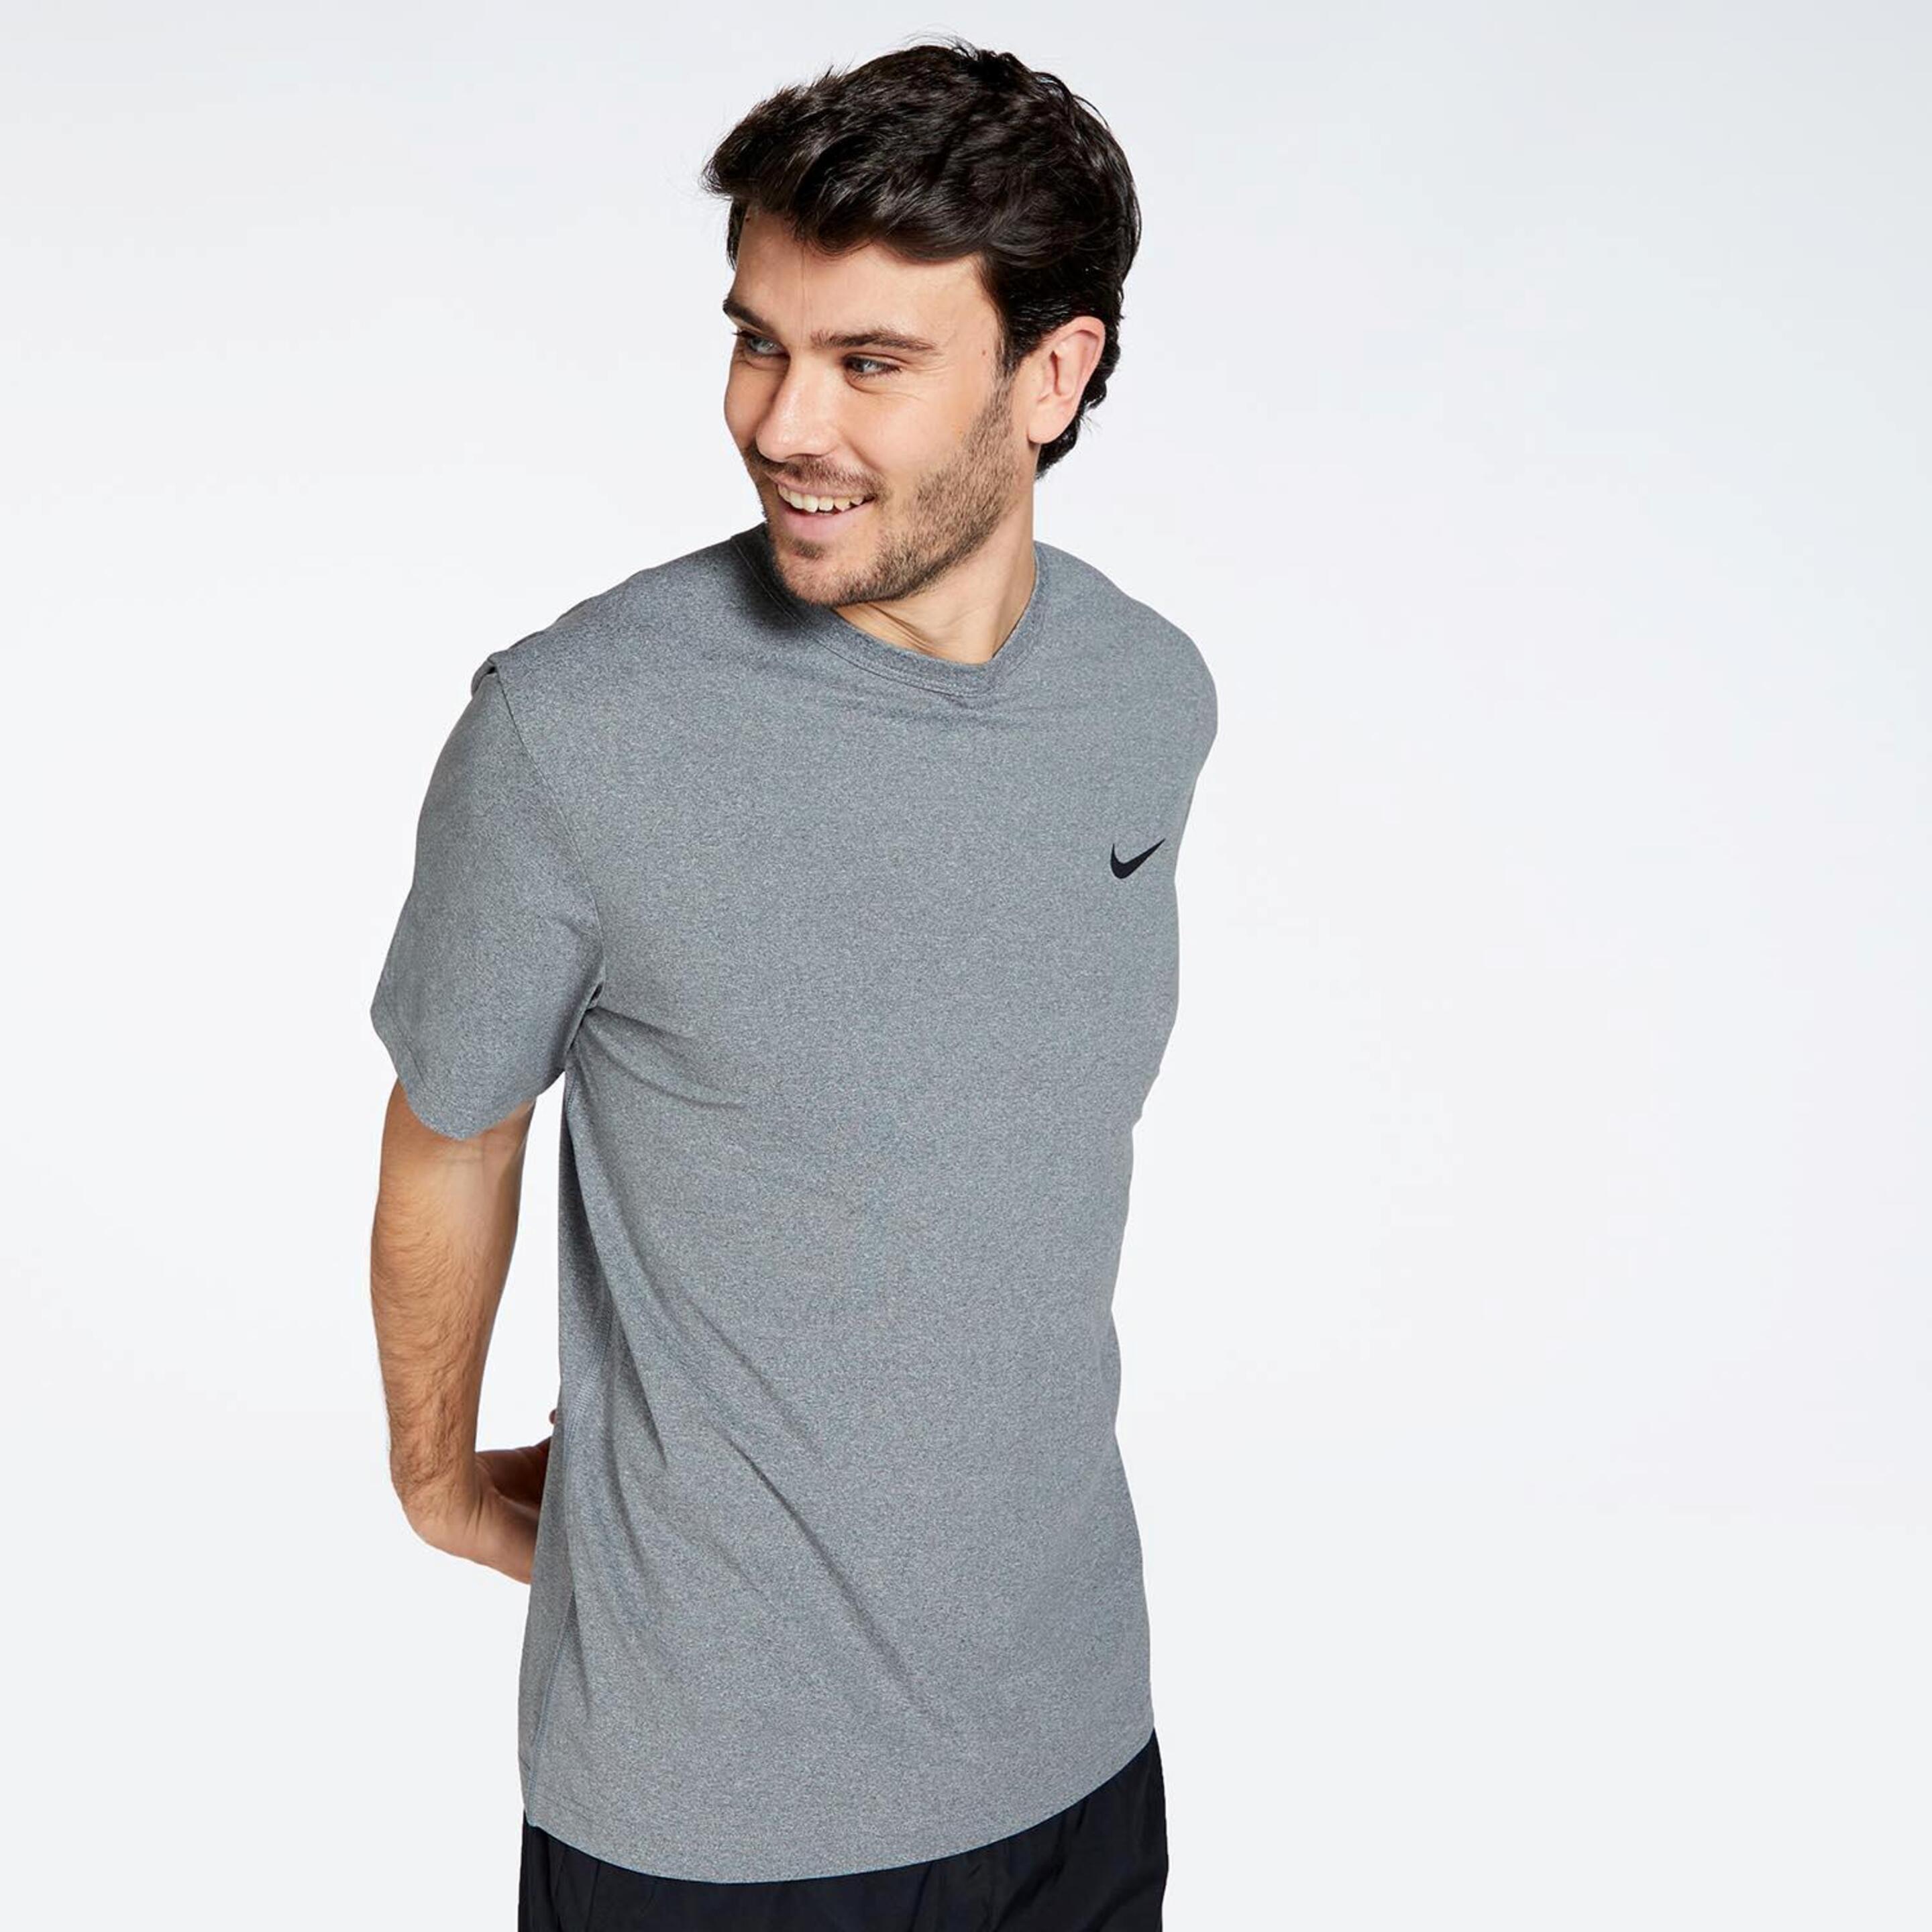 Nike Hyverse - Gris - Camiseta Running Hombre